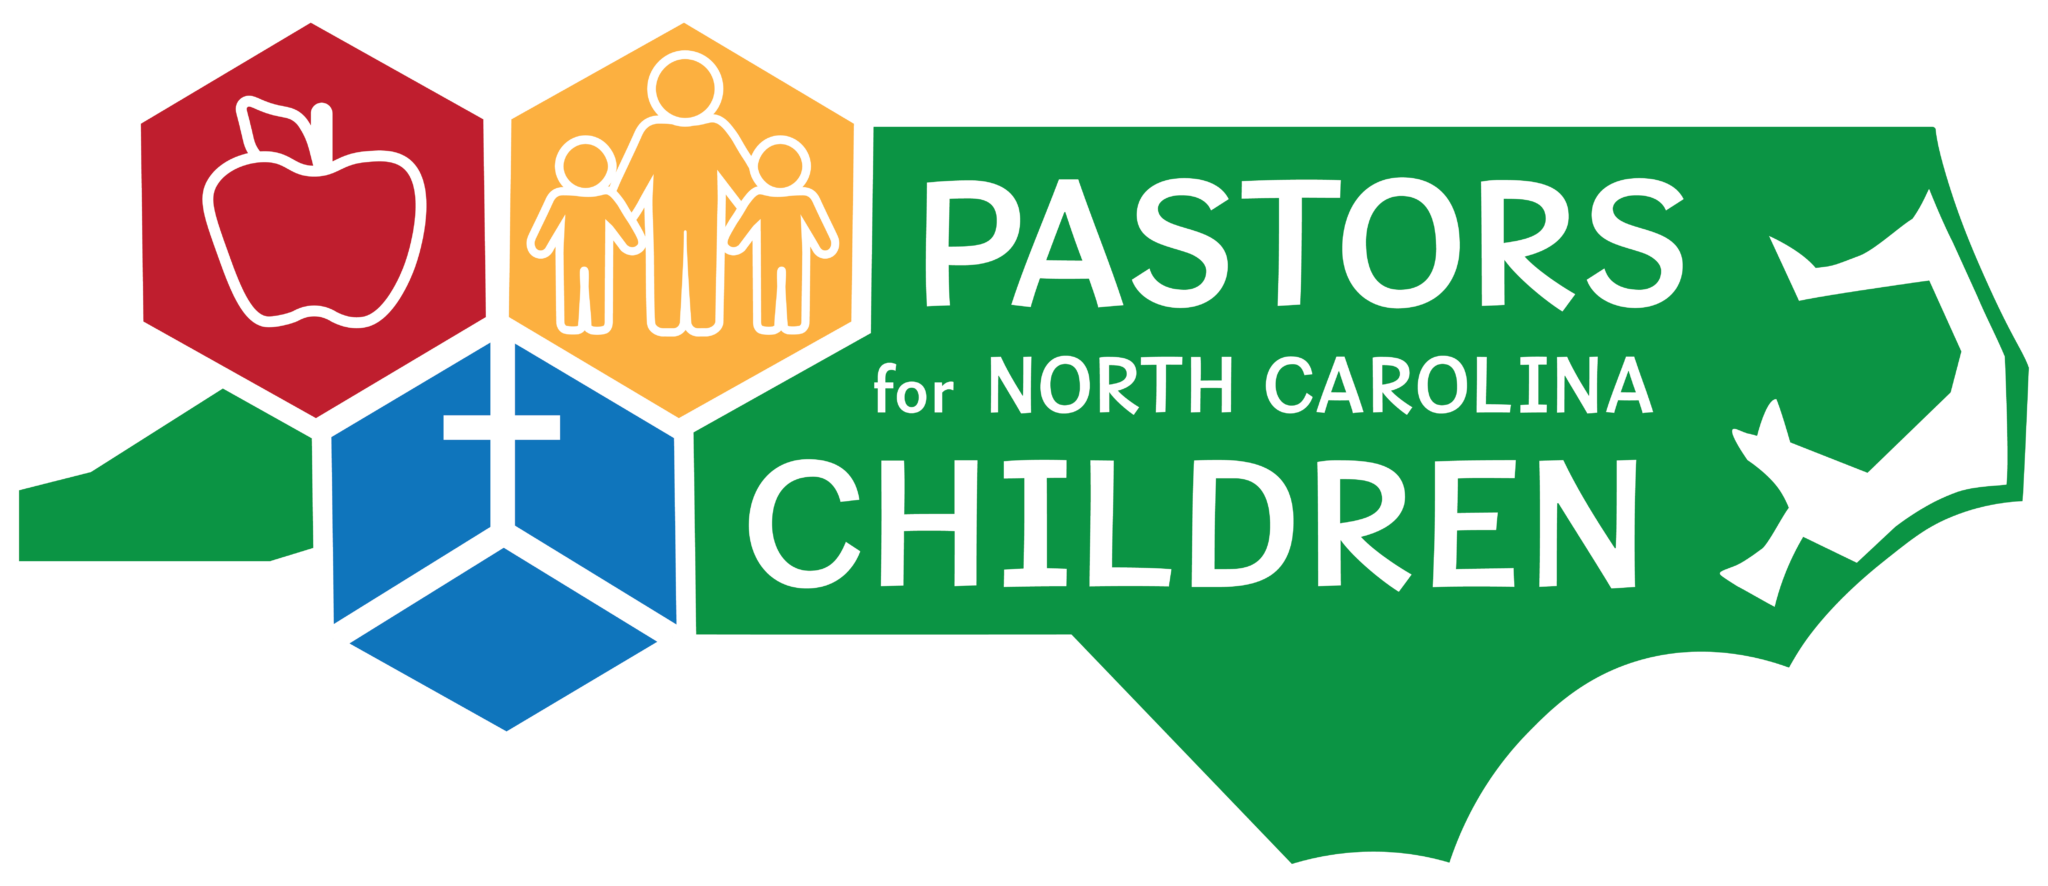 Pastors for North Carolina Children logo